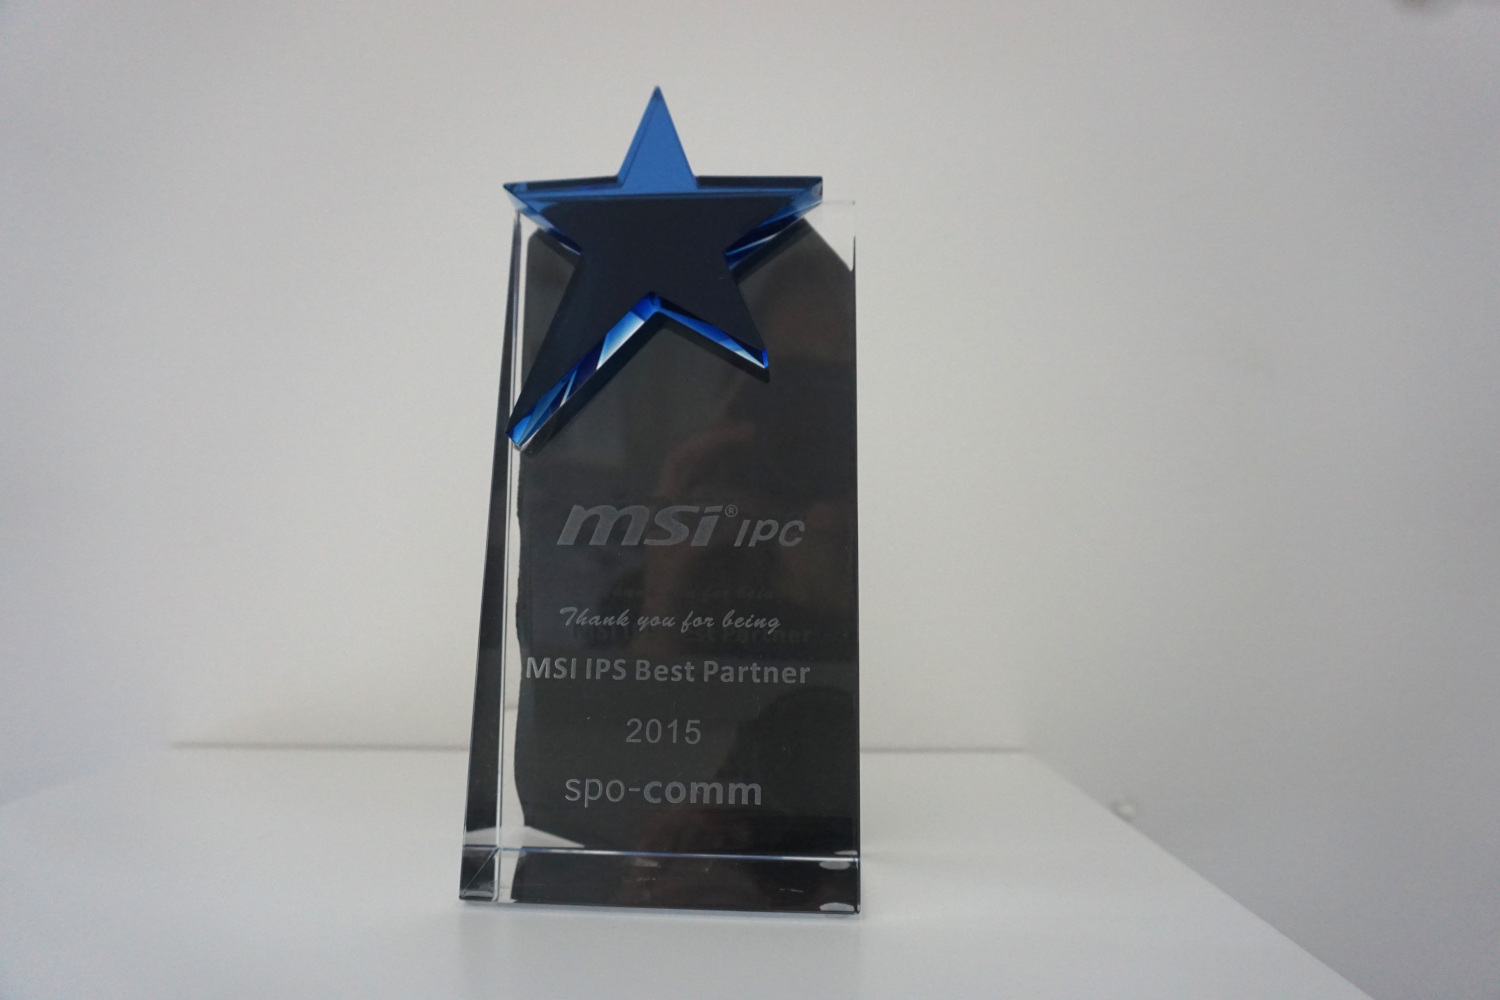 spo-comm wins MSI IPC Award